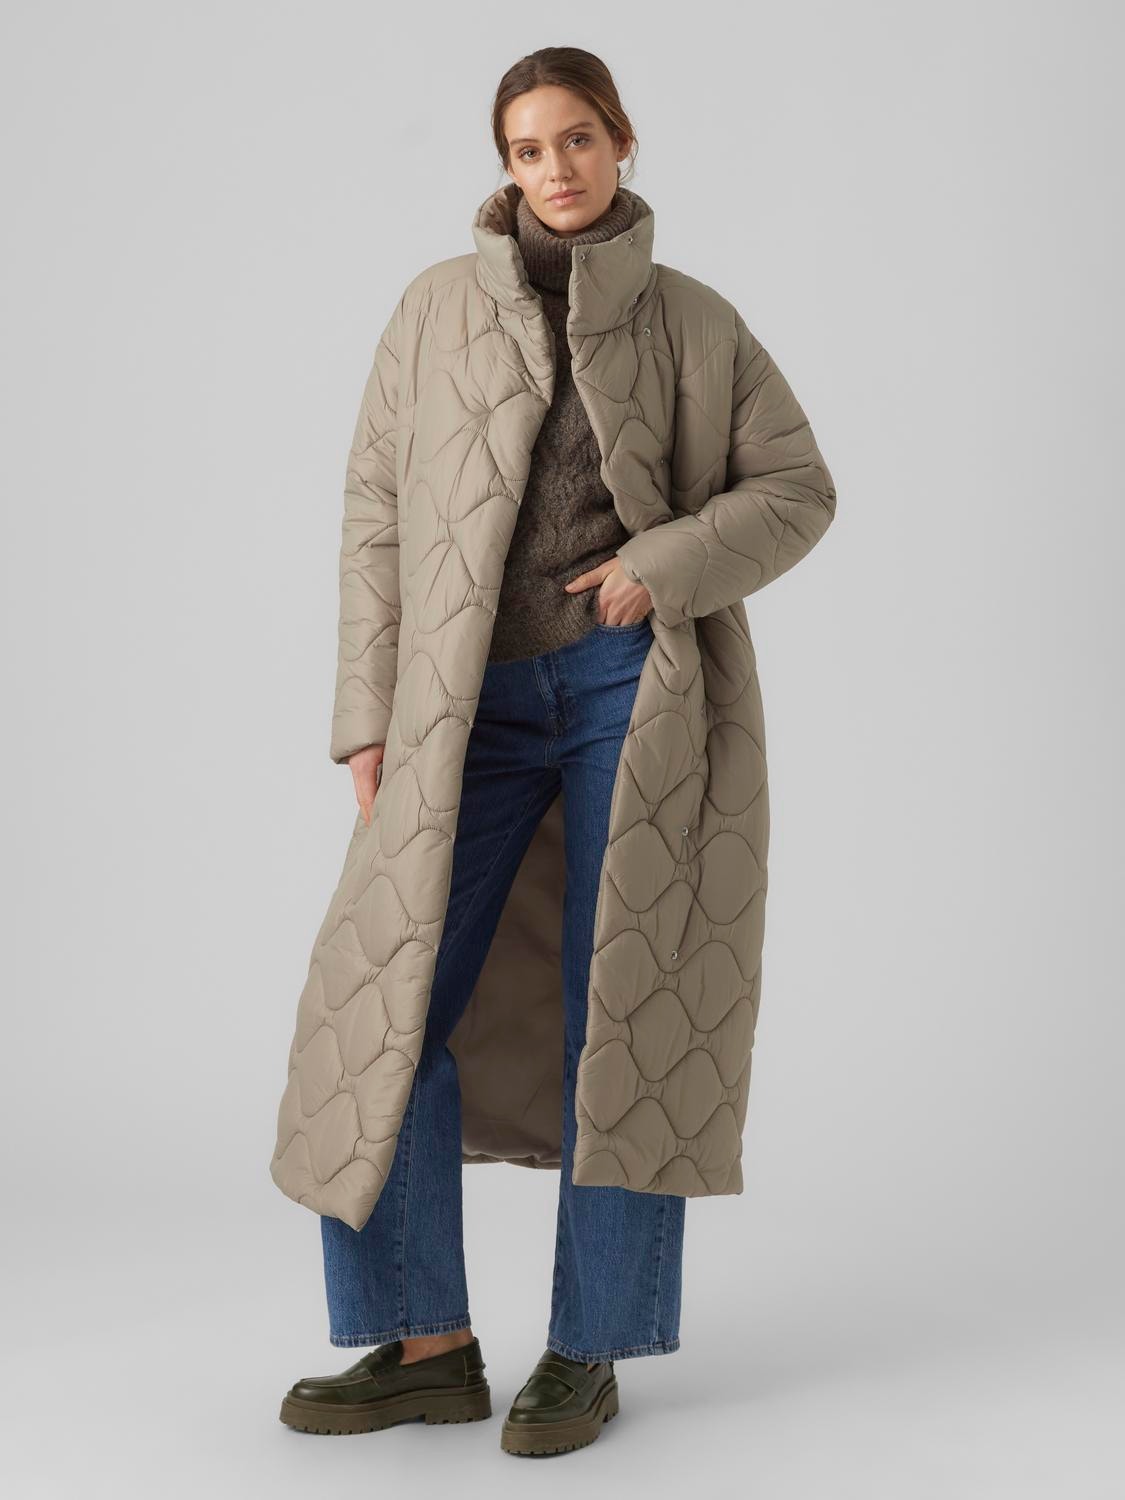 VMASTORIA Coat with Moda® | 50% Vero discount